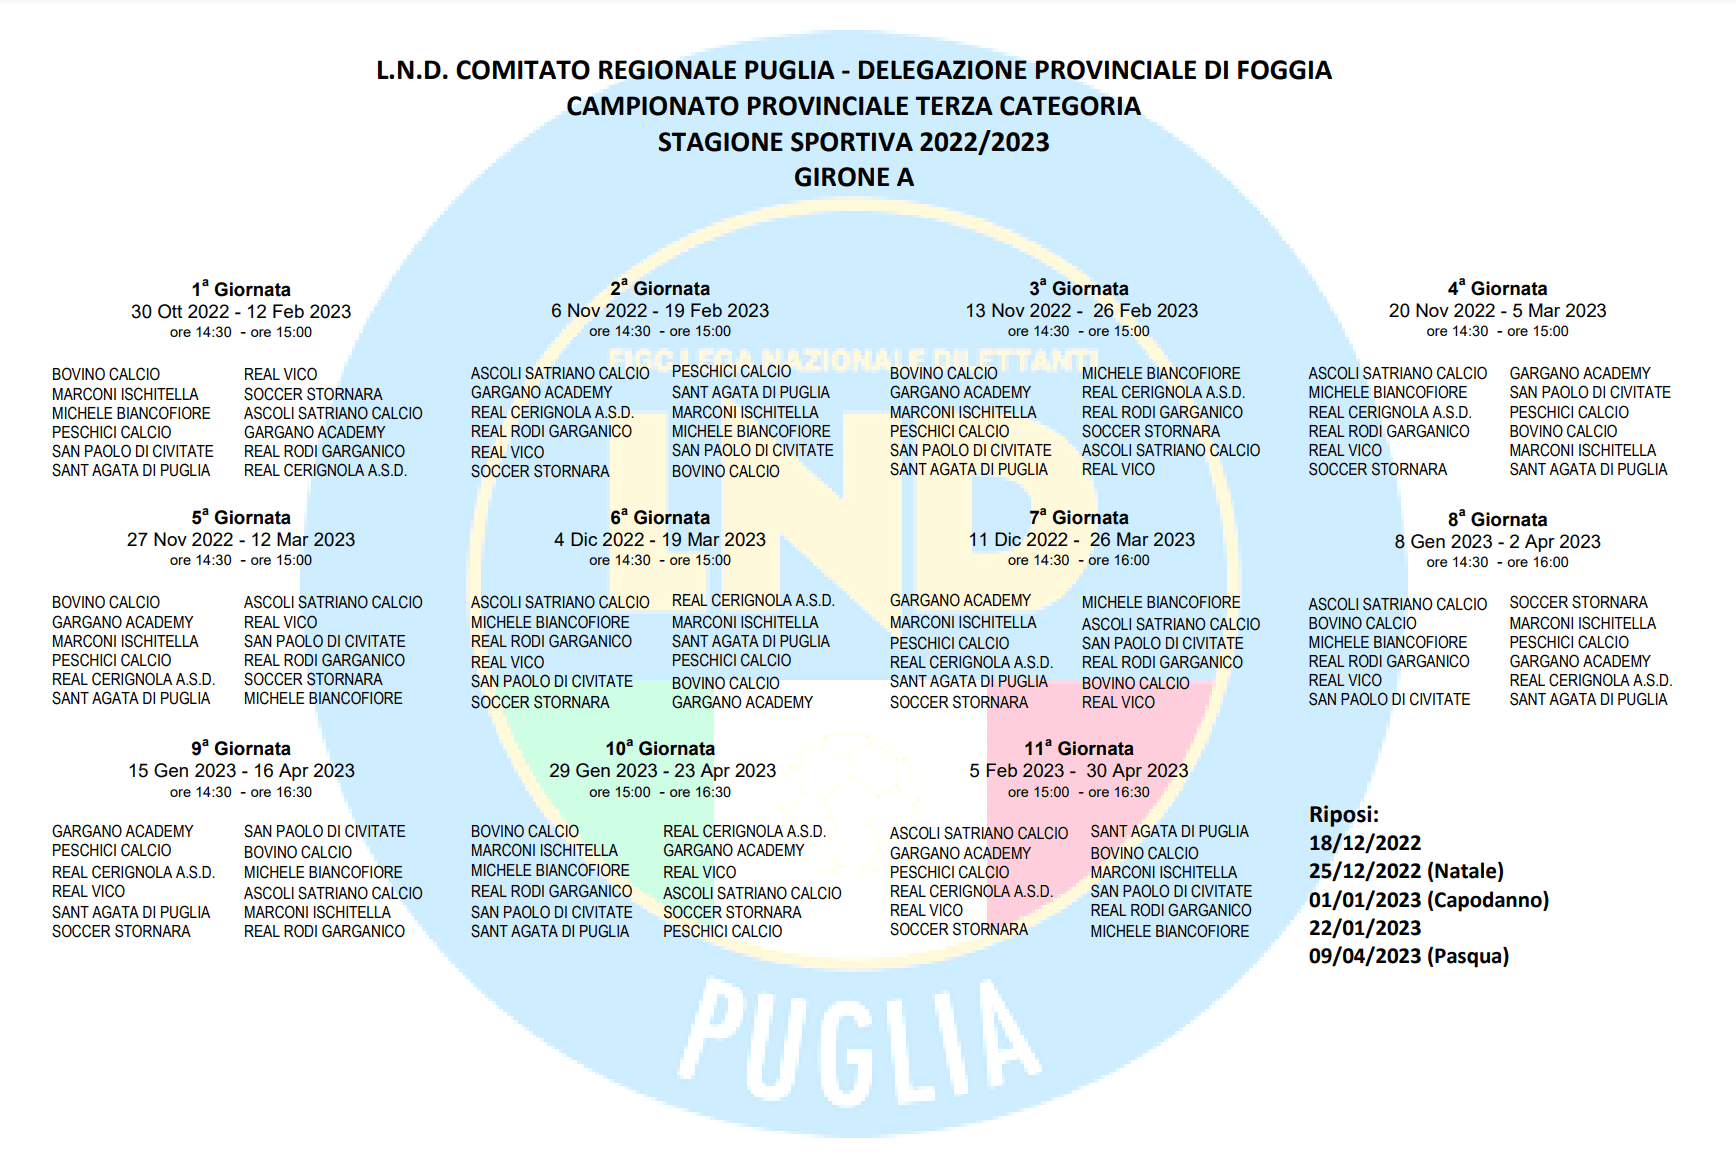 Calendario Terza Categoria Foggia 2022-23